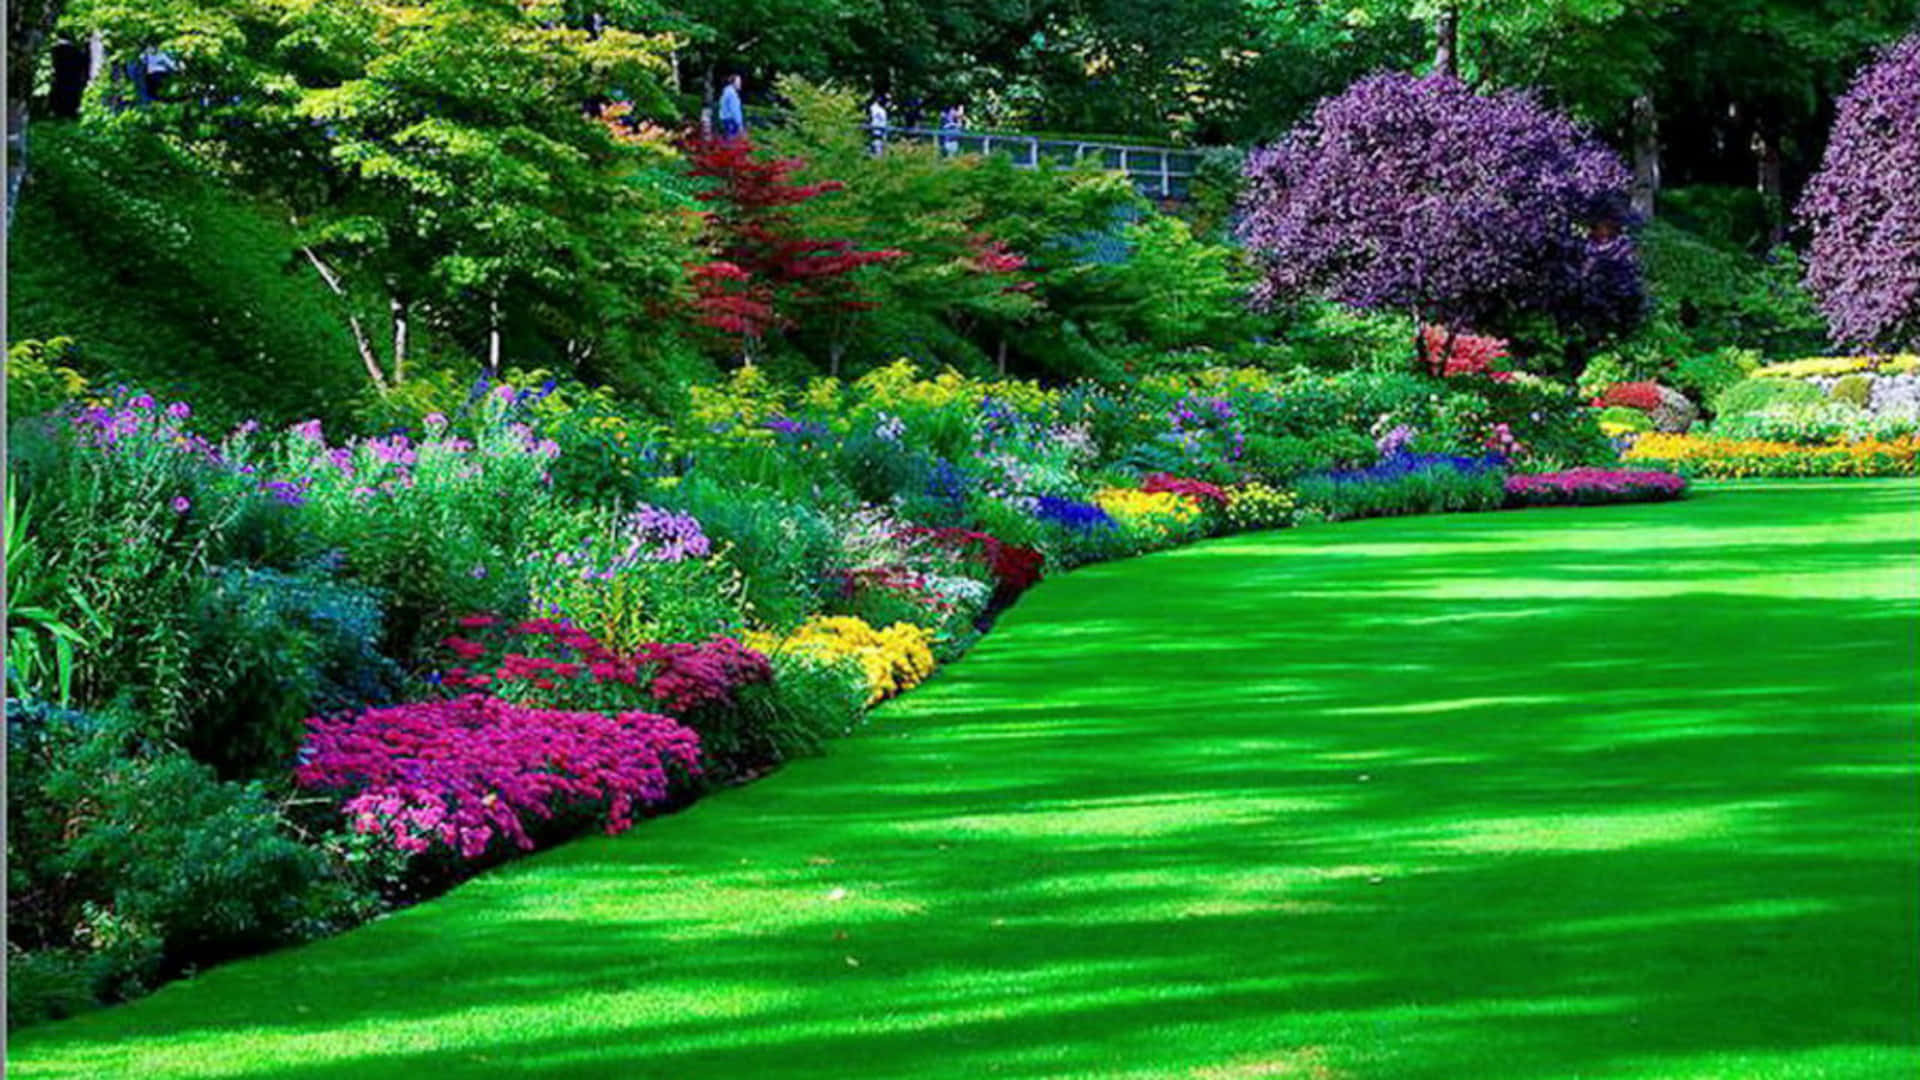 "Beautiful Nature Garden in Summer"